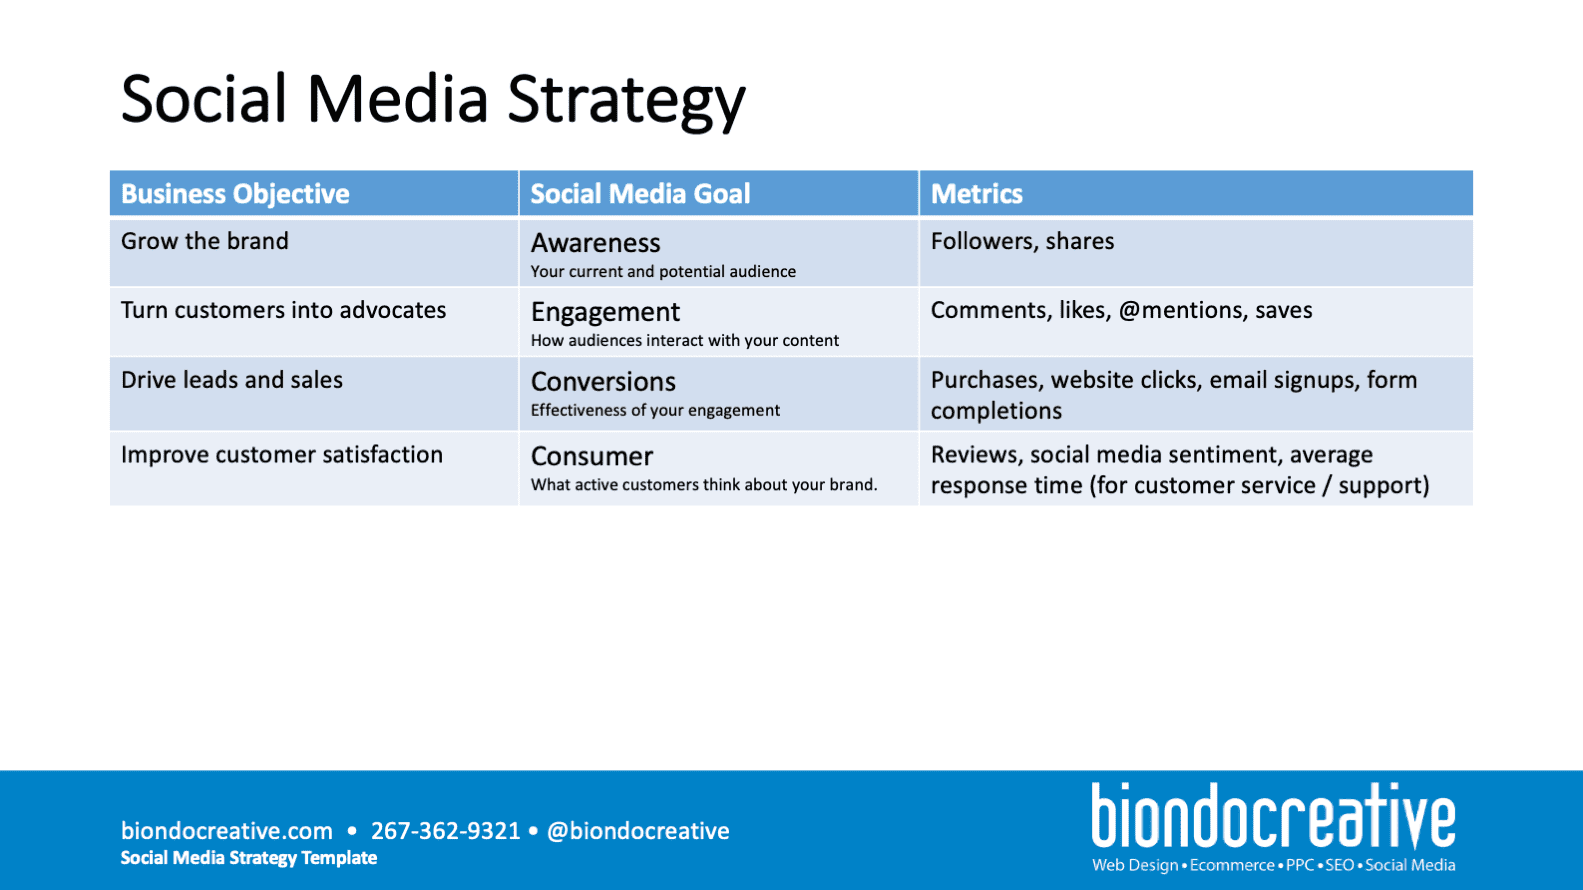 Social Media Strategy Template